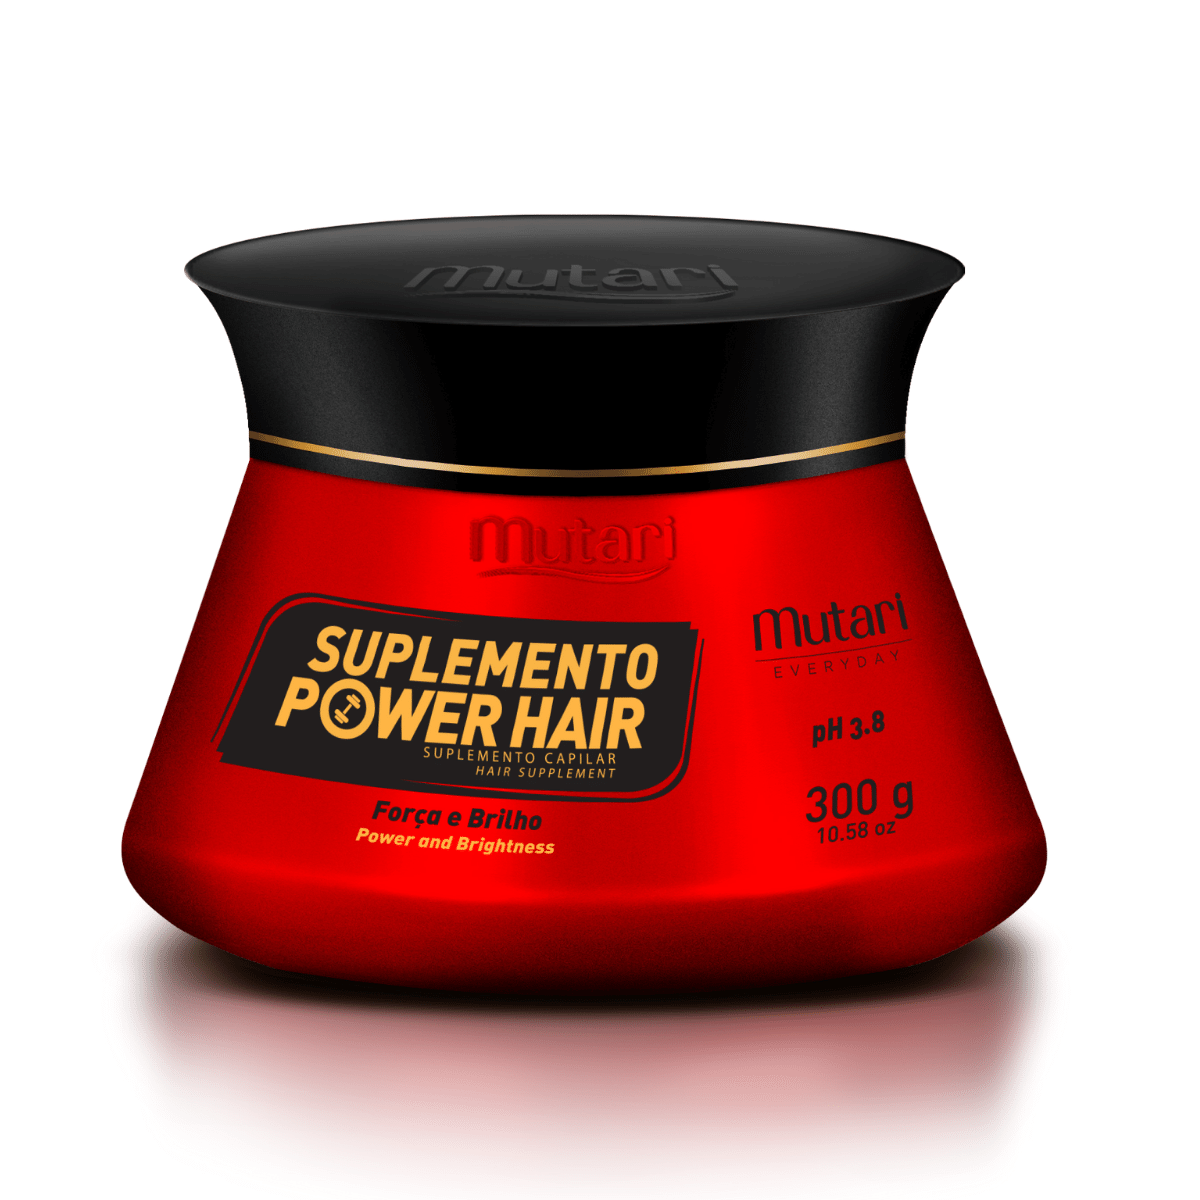 Máscara Capilar Suplemento Power Hair Mutari - 300g